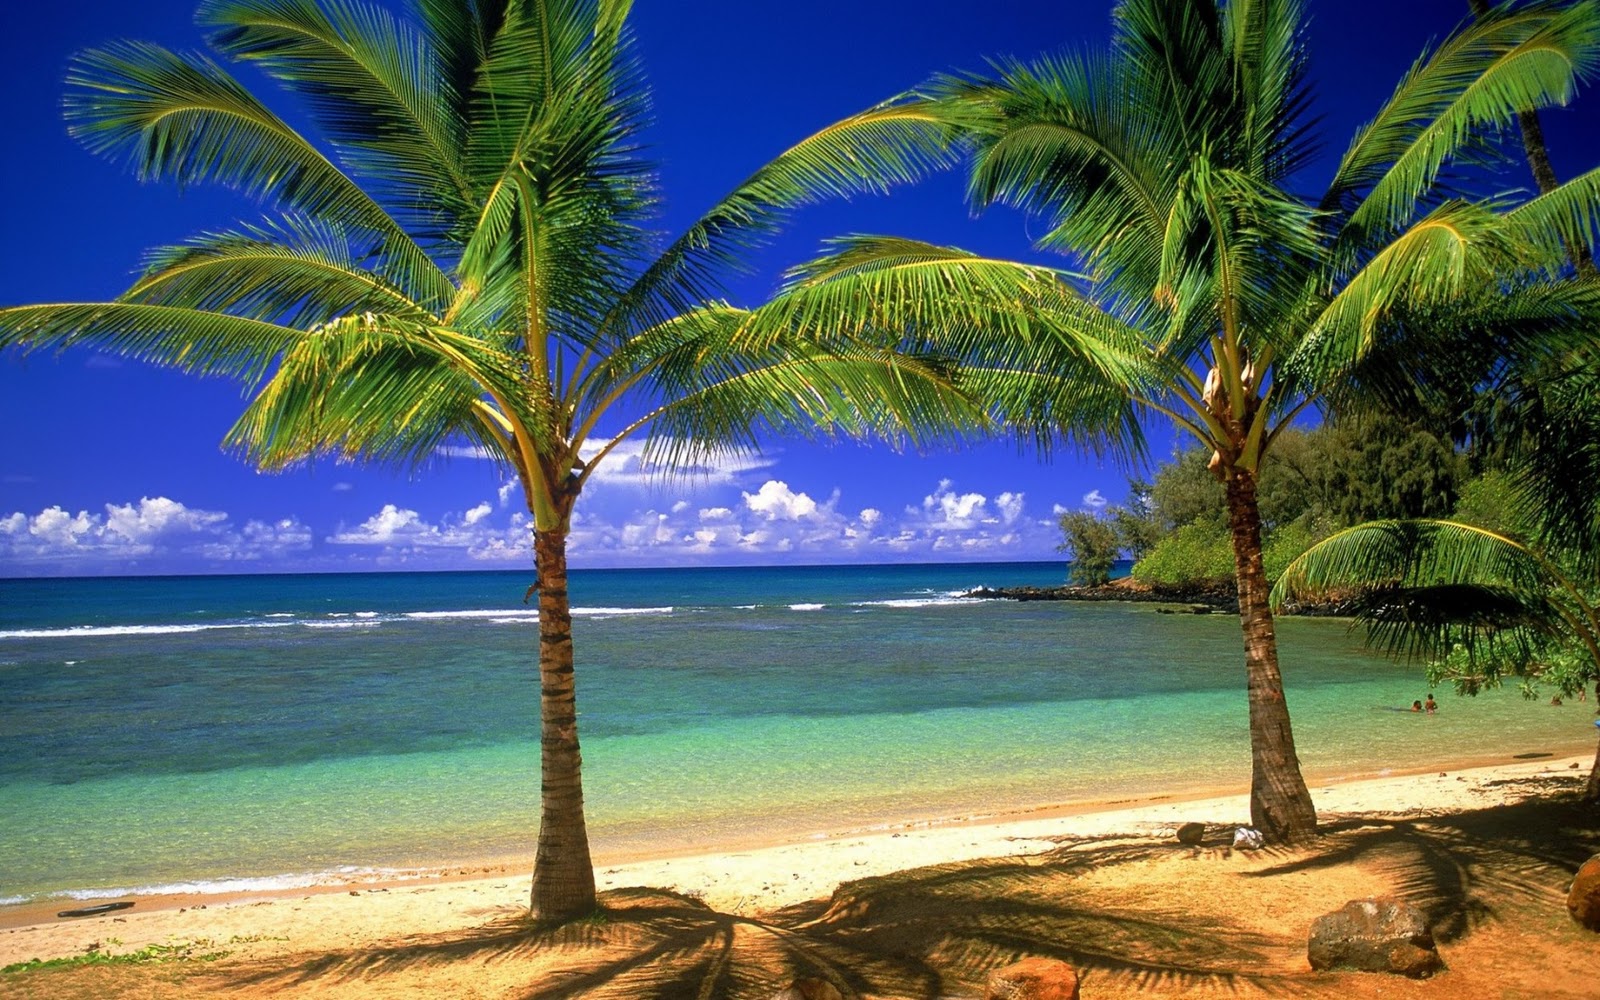 https://blogger.googleusercontent.com/img/b/R29vZ2xl/AVvXsEhzB6DXeMOnwV1Qqgf5gysNHZyNU5Ce6Icv6lDT2vPVXEuyATzqNMVdRknCihS0wXOTMMZMFyYBPIMseGILOnpbJ96MH53kVR38NqKYhBJM2YyBEQ8w1Xpa497s7HyWduRRZShPNrEeZAs/s1600/6-Zomer-achtergronden-zomer-wallpapers-strand-palmbomen-en-de-zee-achtergrond.jpg